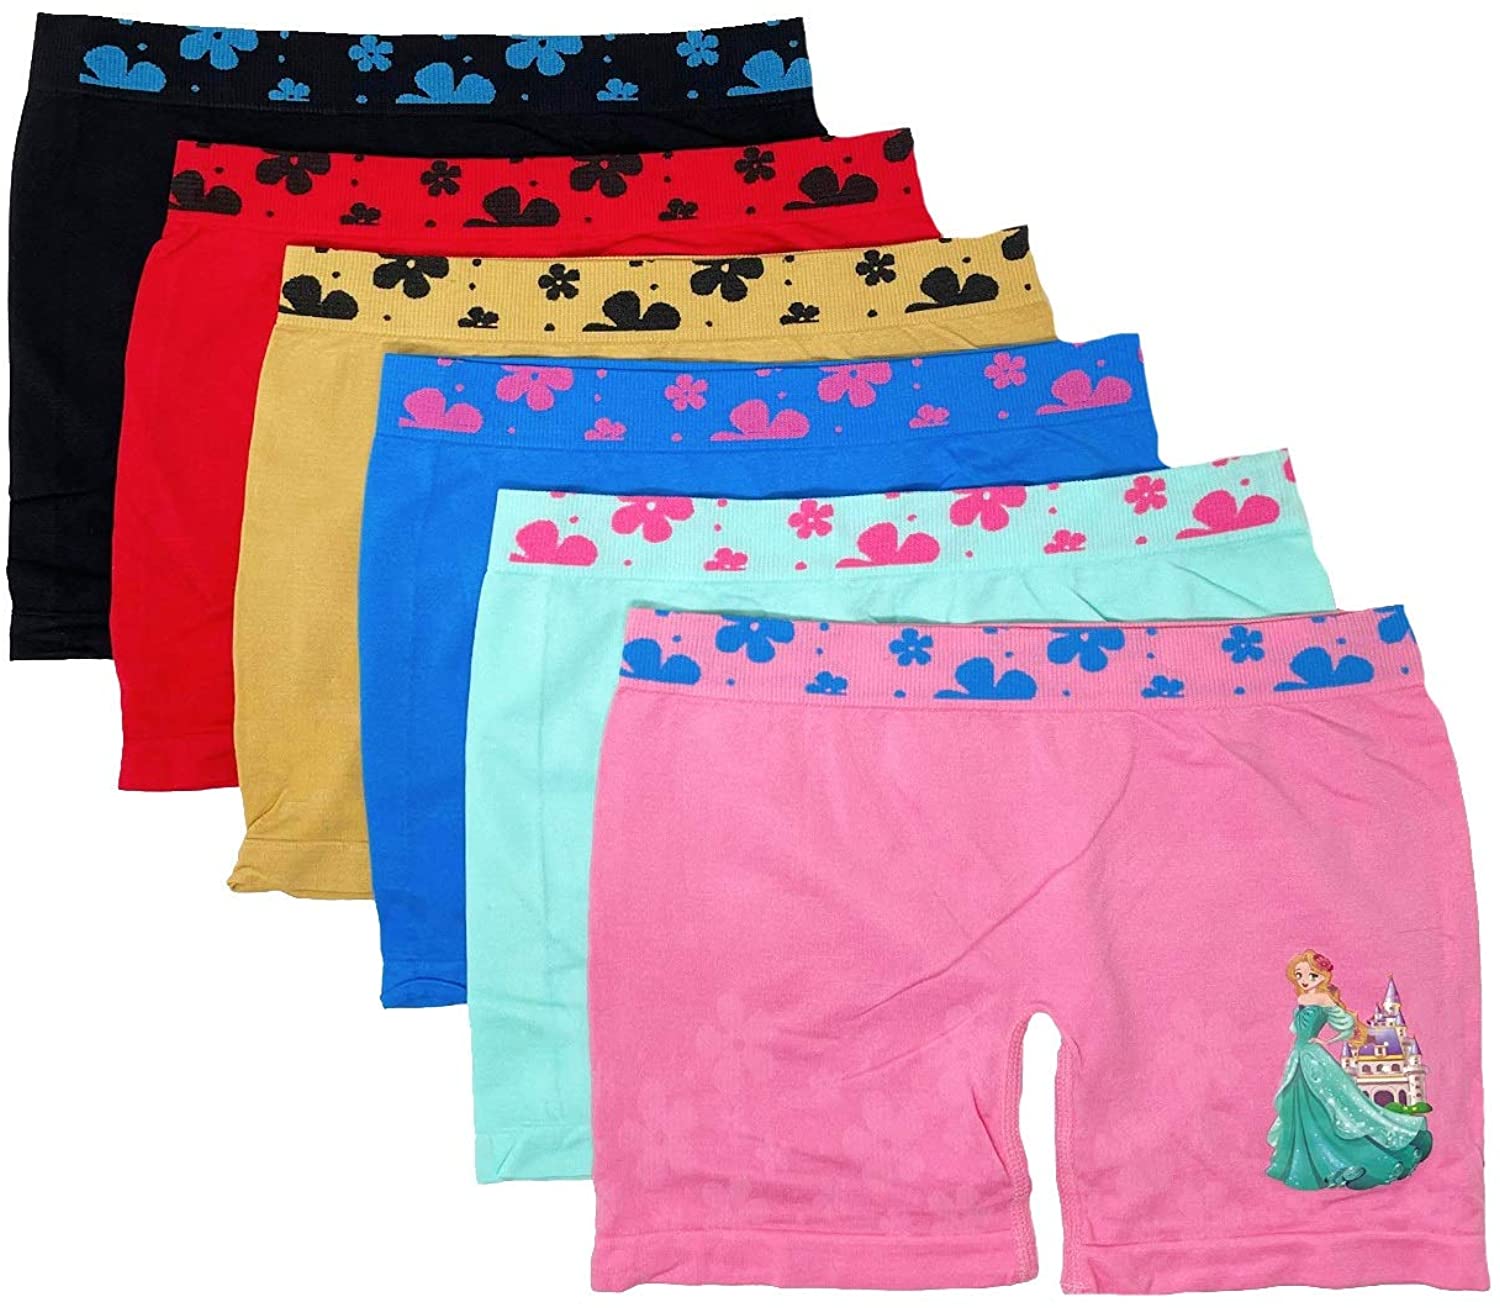 6, 12pk Girls Dance Bike Shorts Under Dress Dance Bike Shorts for  Playground Sports or Under Skirts